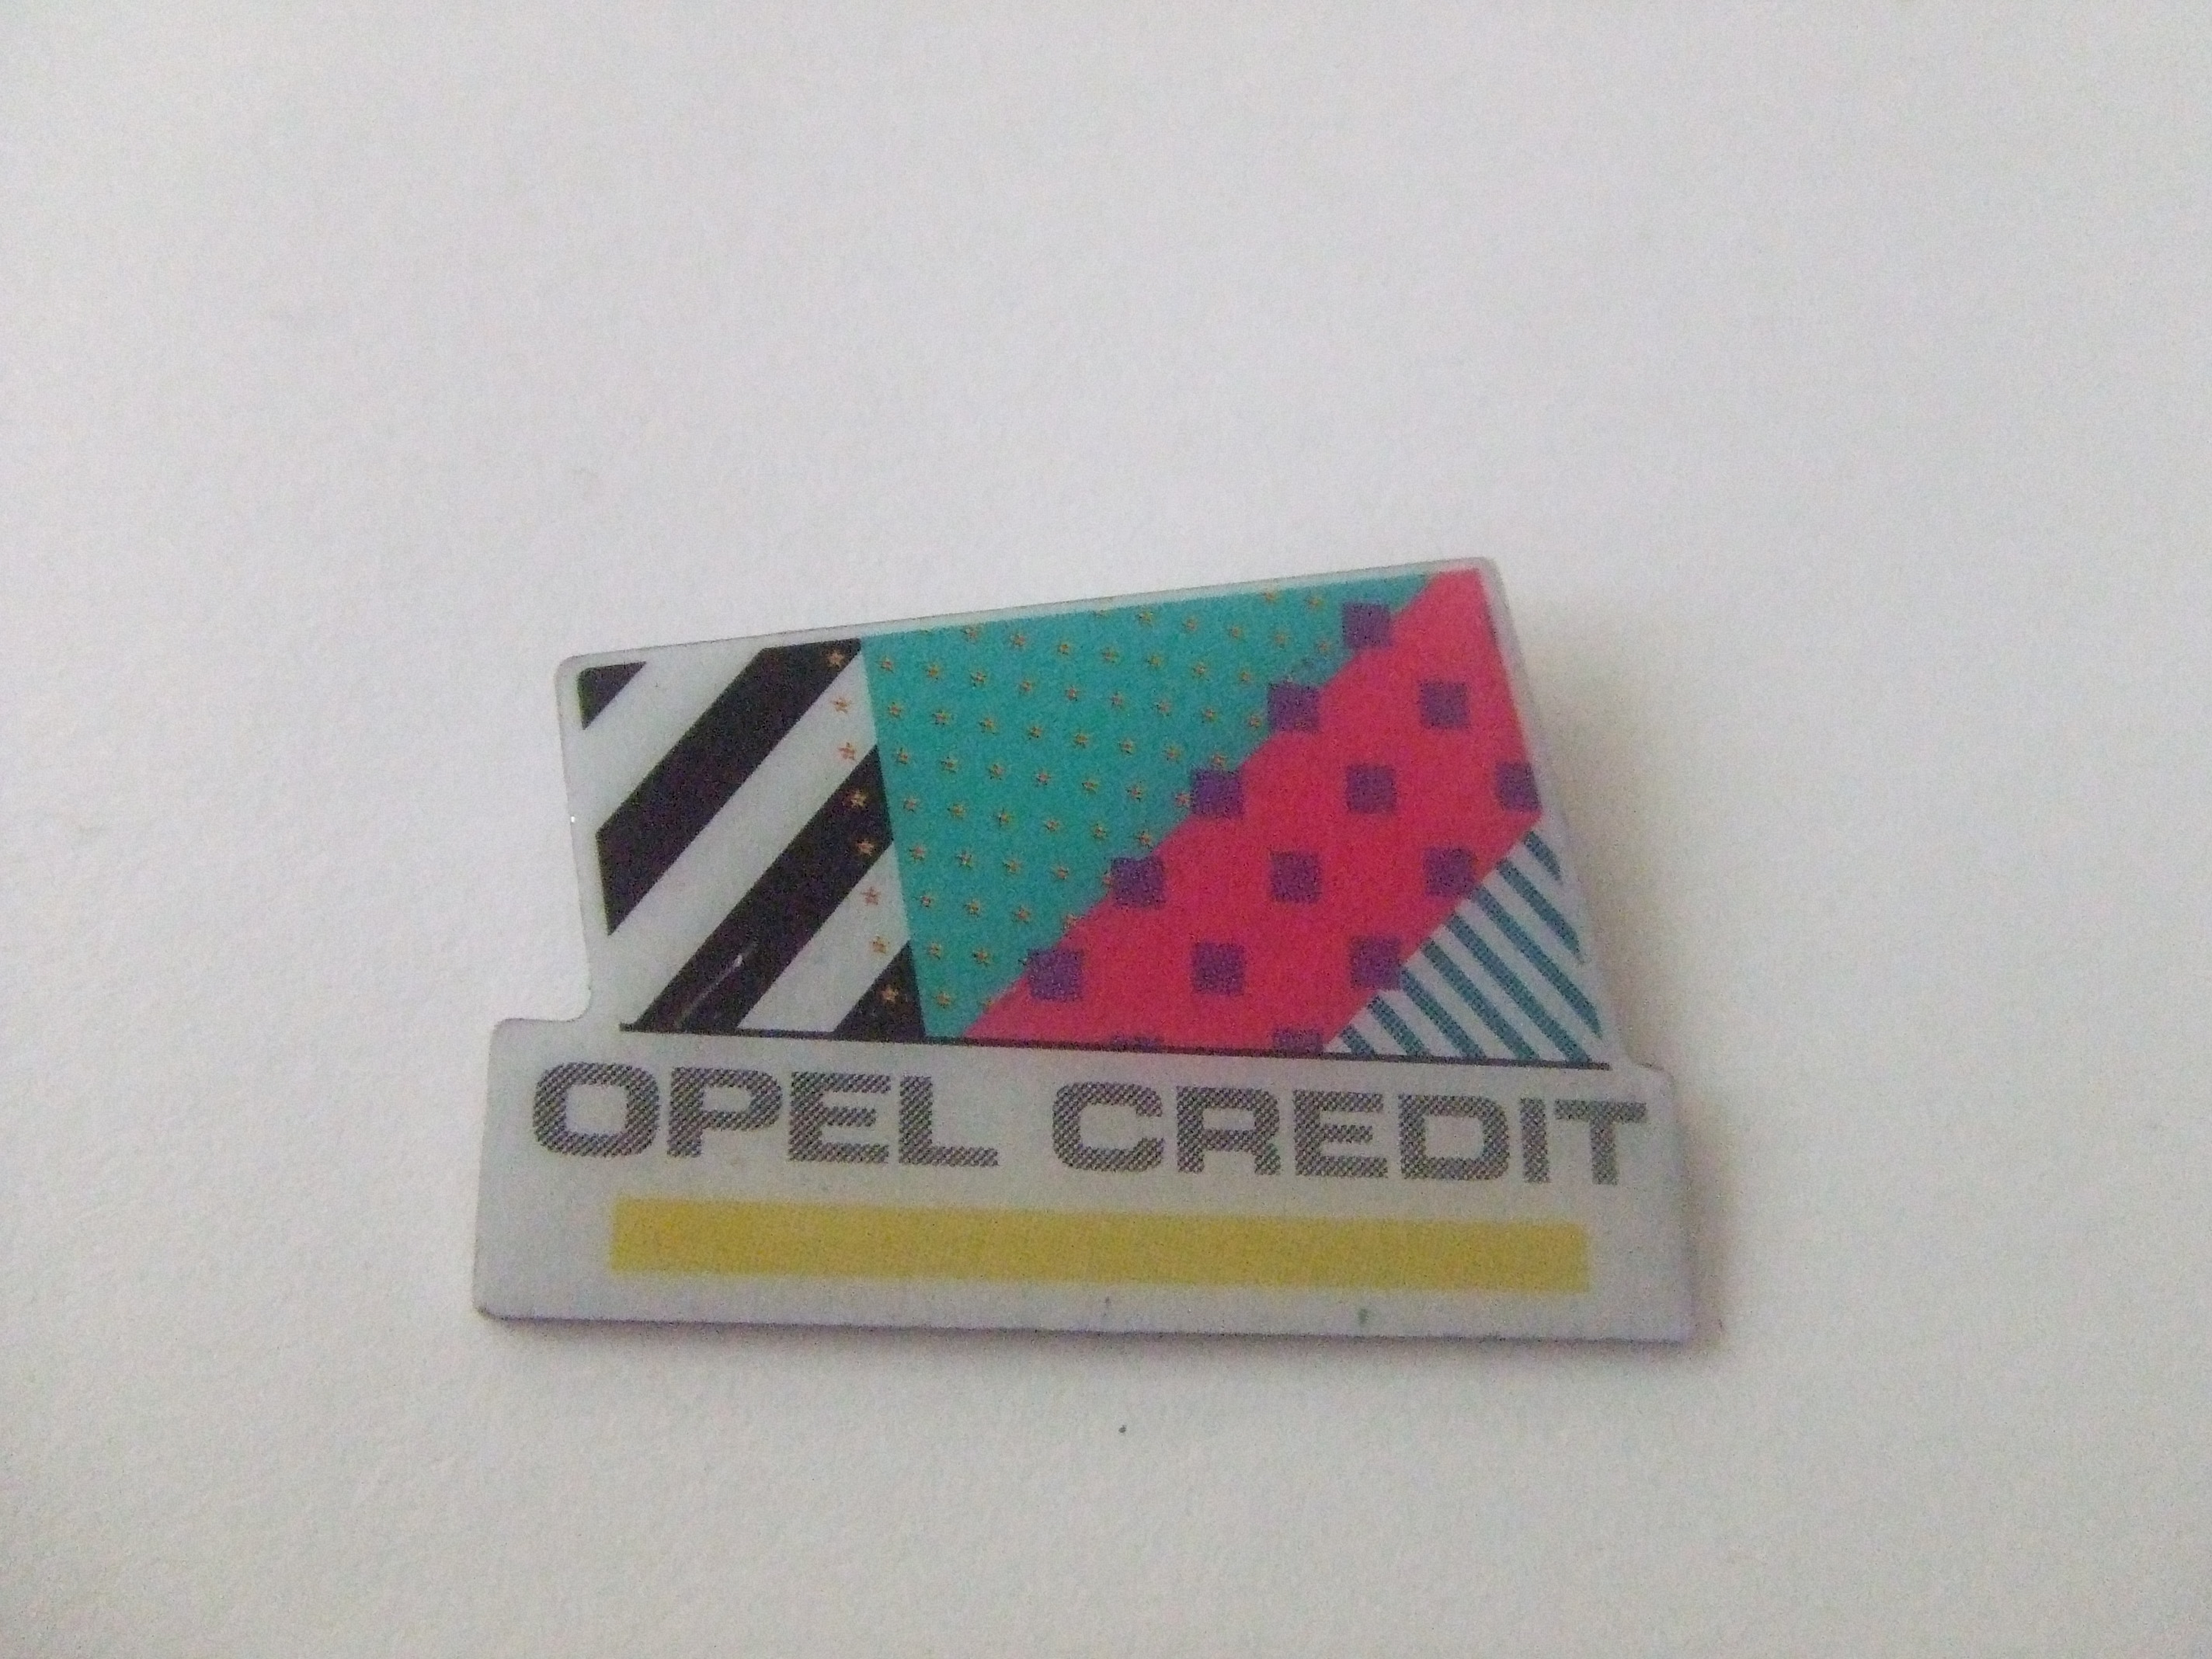 Opel credit